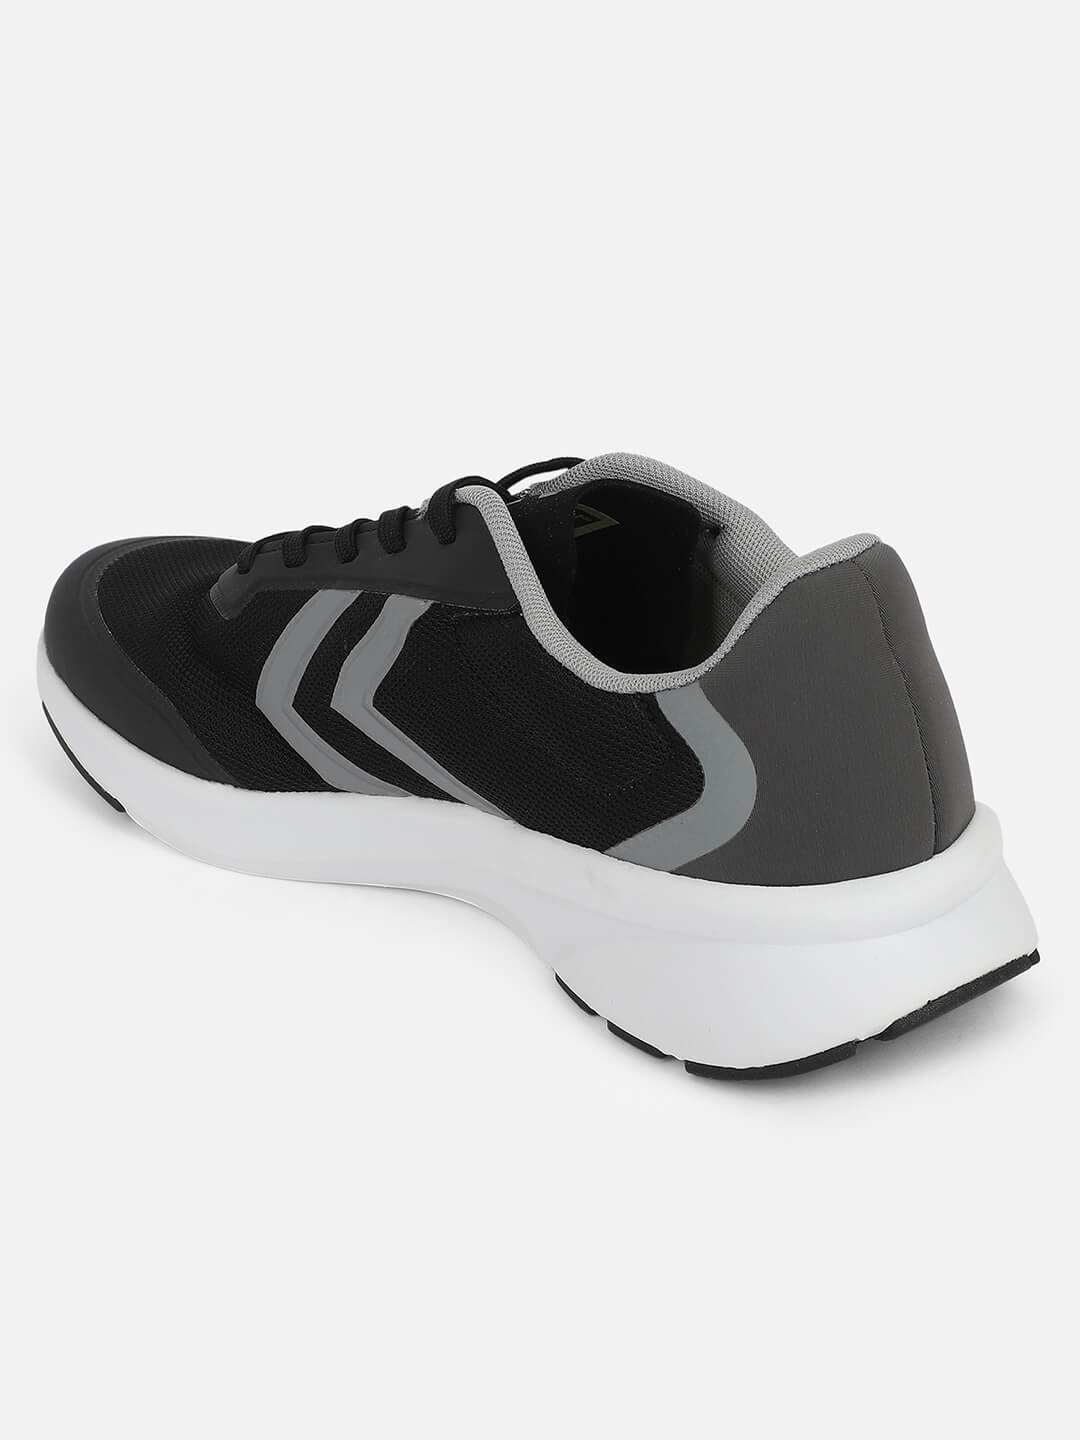 Flow Breather Black Sneaker for Men